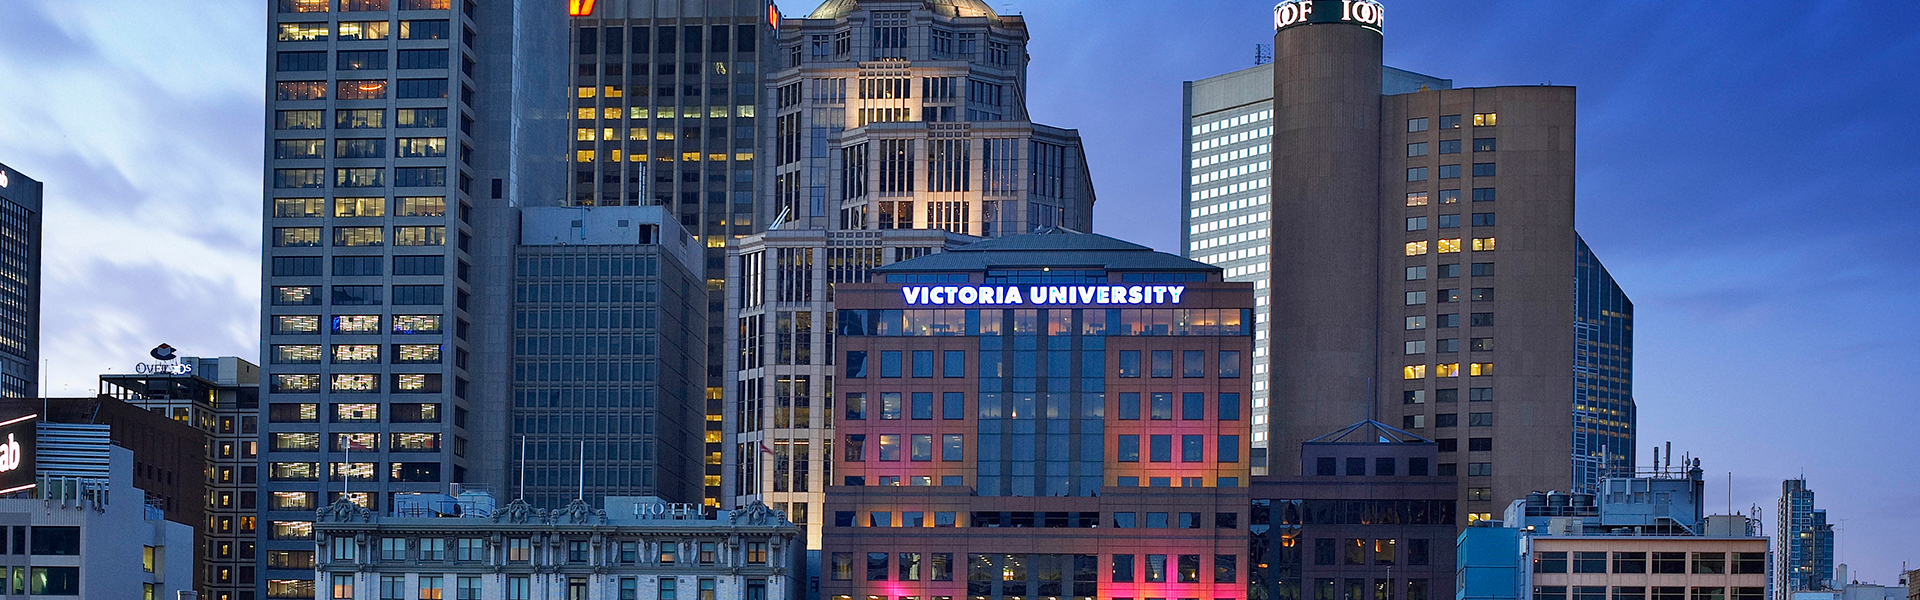 Victoria University Business School | Victoria University | Melbourne  Australia